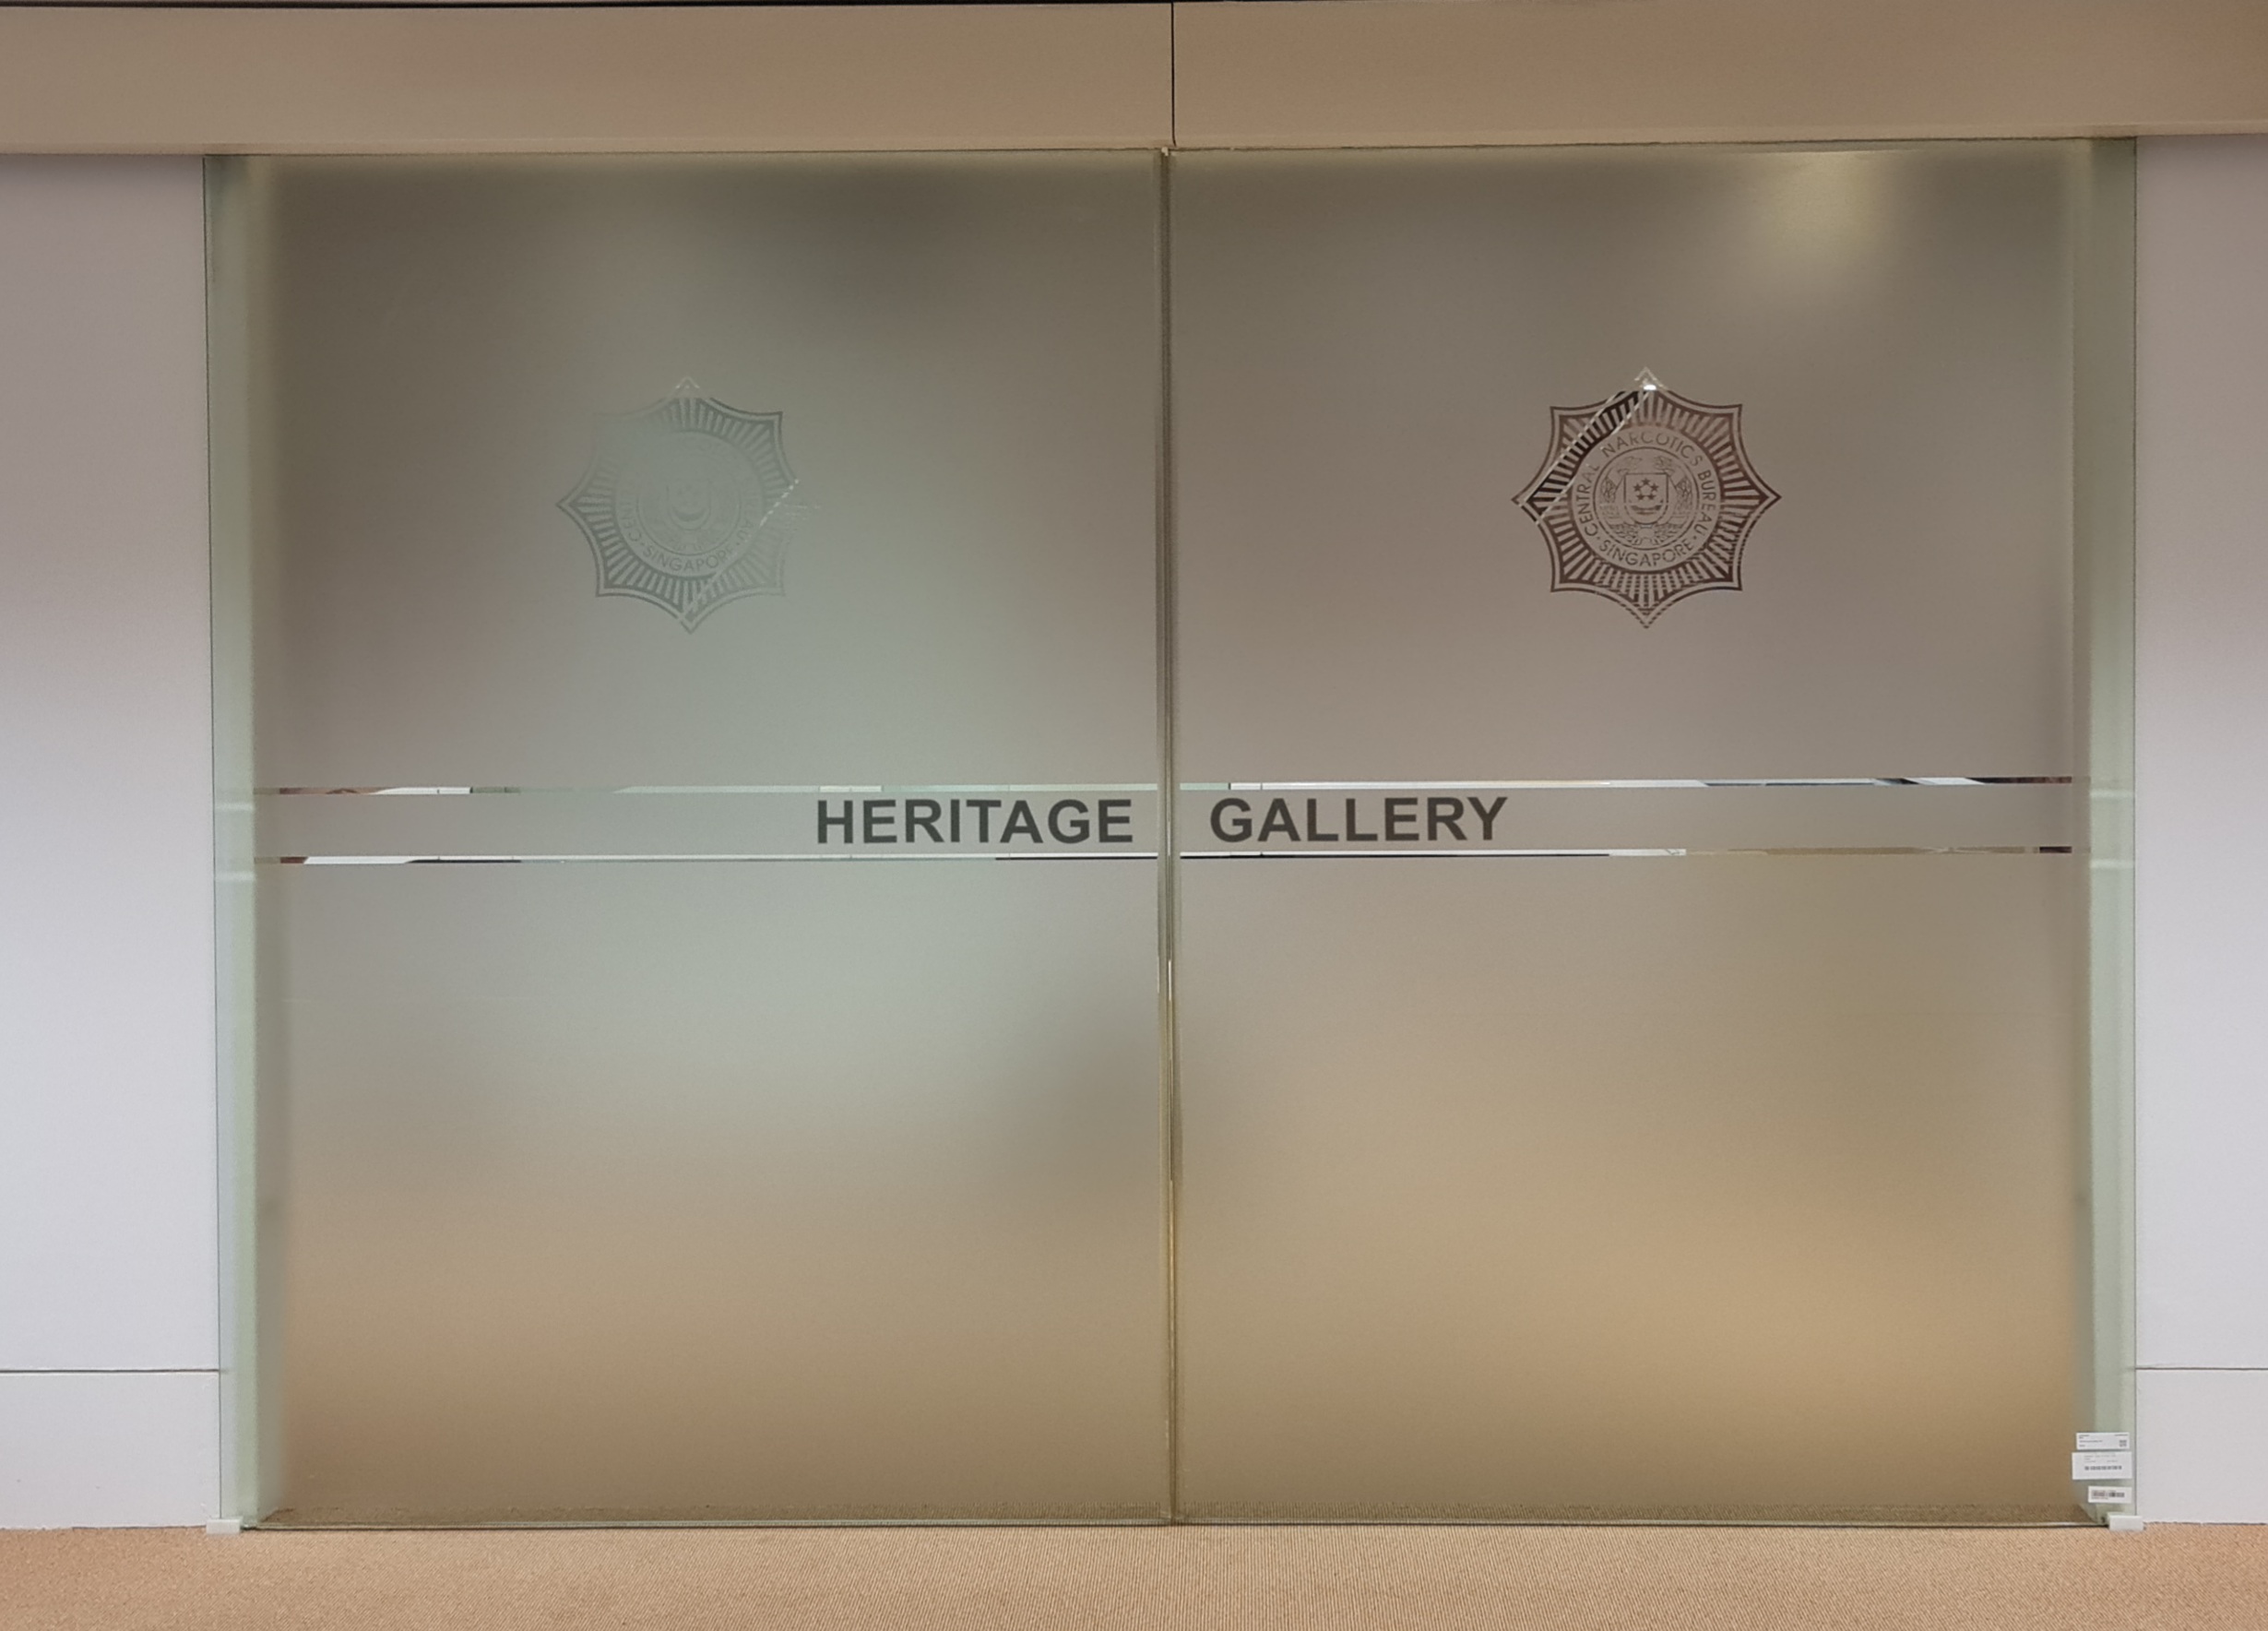 360 virtual heritage gallery